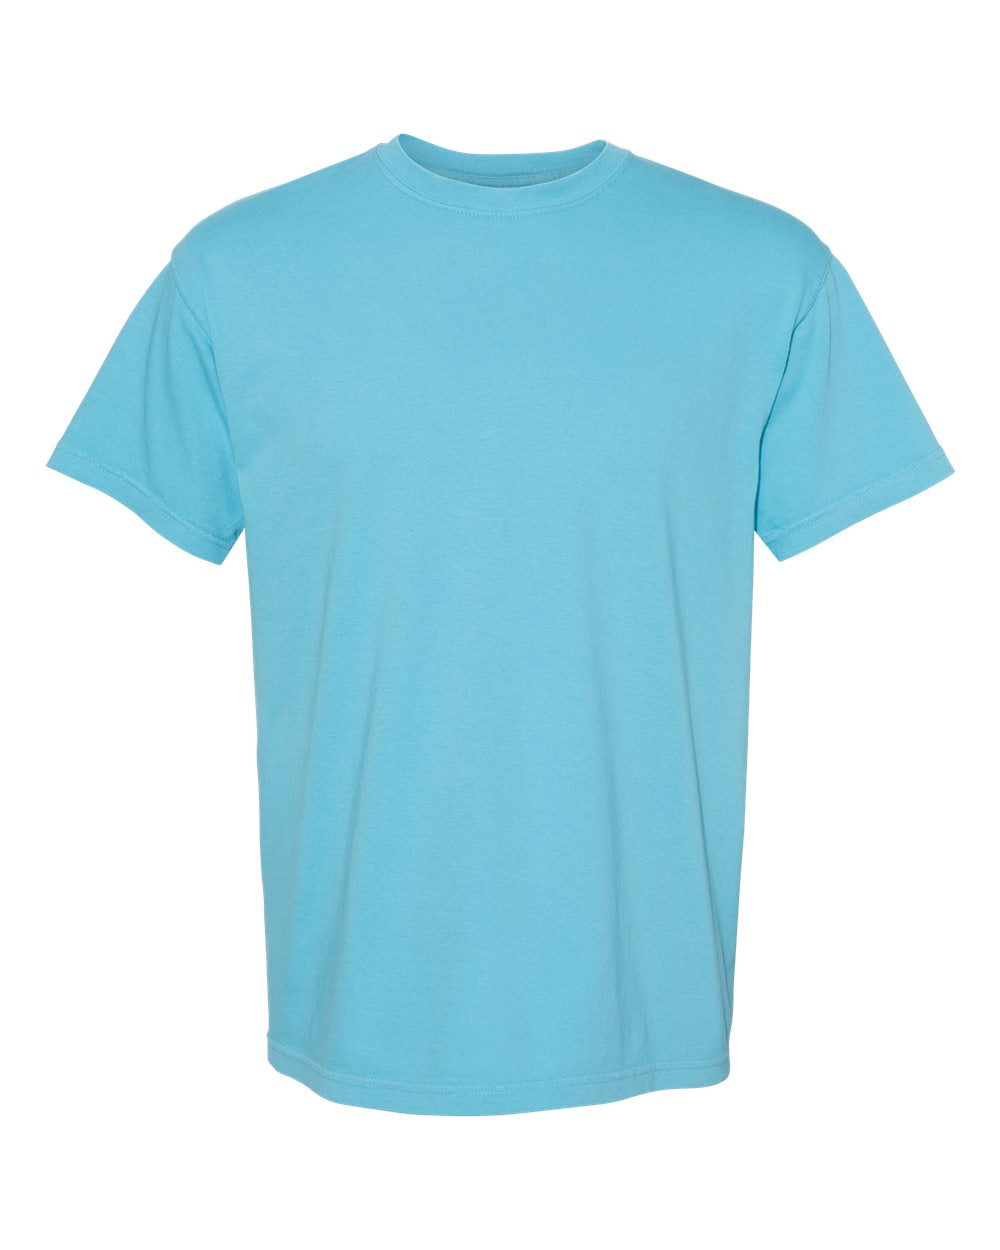 Unisex Garment-Dyed Heavyweight T-Shirt - Comfort Colors 1717